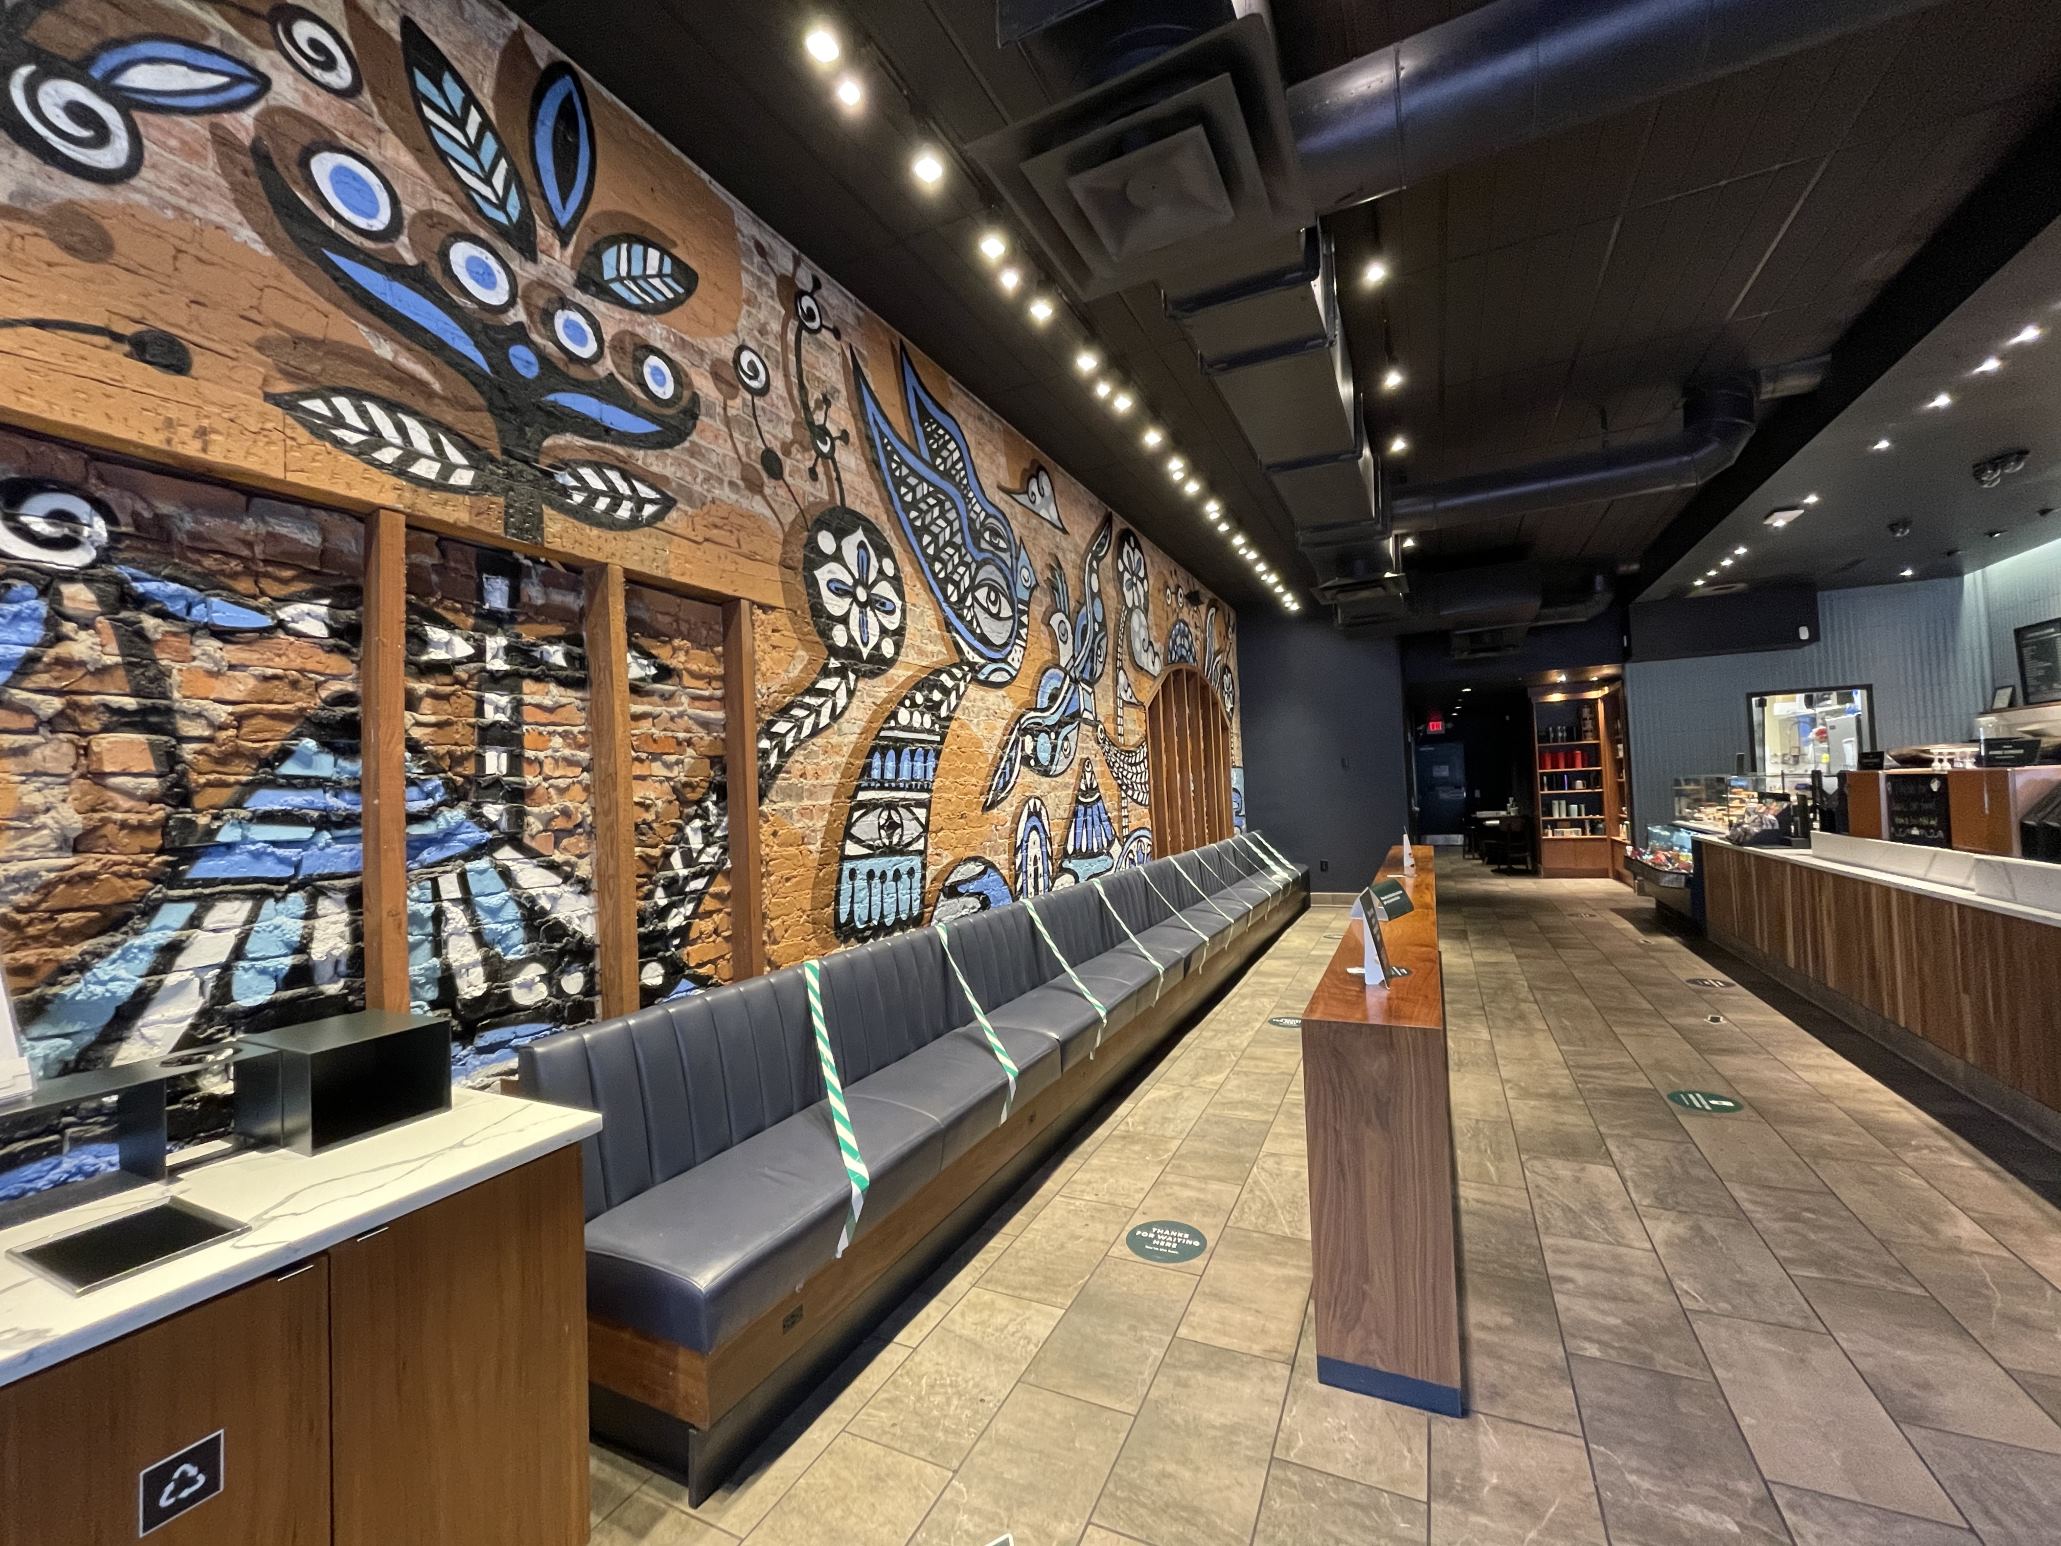 Interior shot of Starbucks.